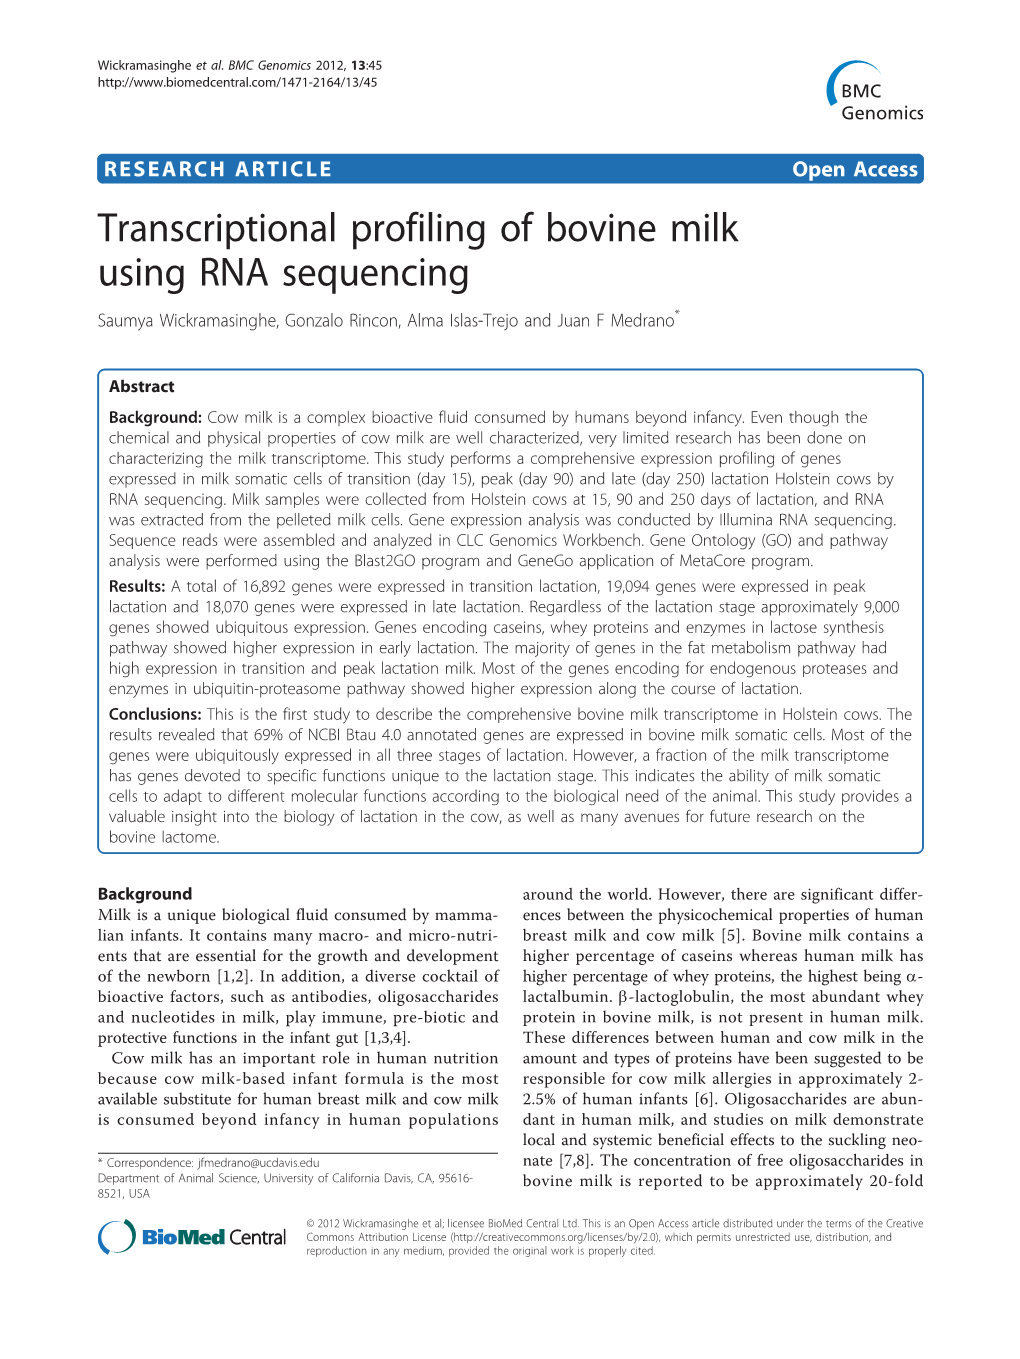 Transcriptional Profiling of Bovine Milk Using RNA Sequencing Saumya Wickramasinghe, Gonzalo Rincon, Alma Islas-Trejo and Juan F Medrano*